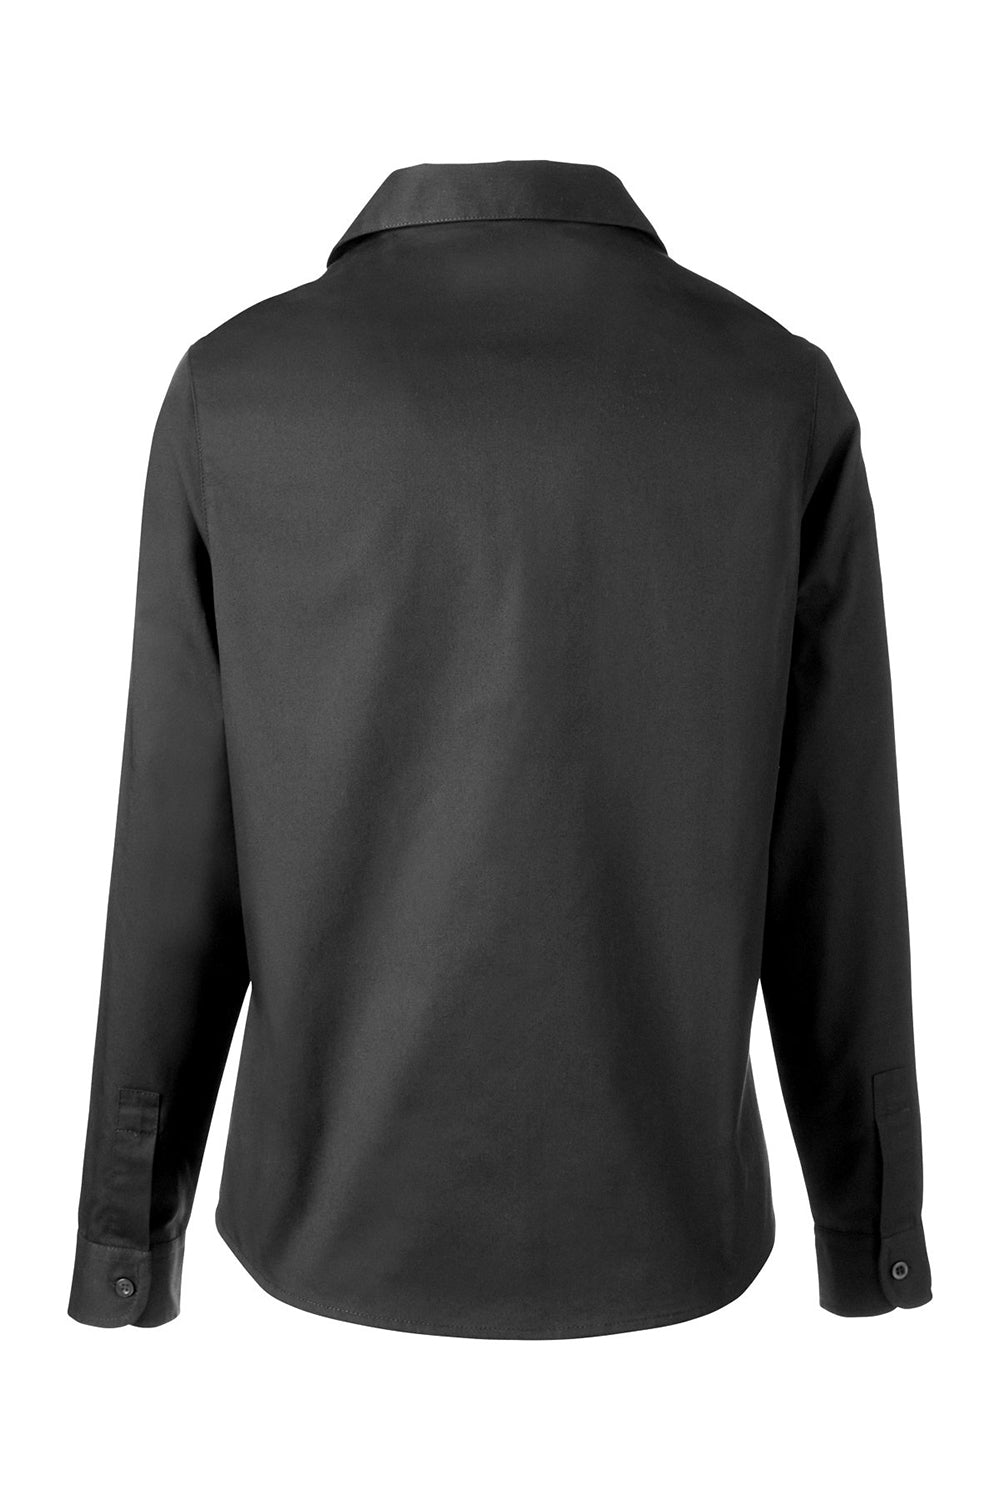 Harriton M585LW Womens Advantage Long Sleeve Button Down Shirt w/ Double Pockets Dark Charcoal Grey Flat Back